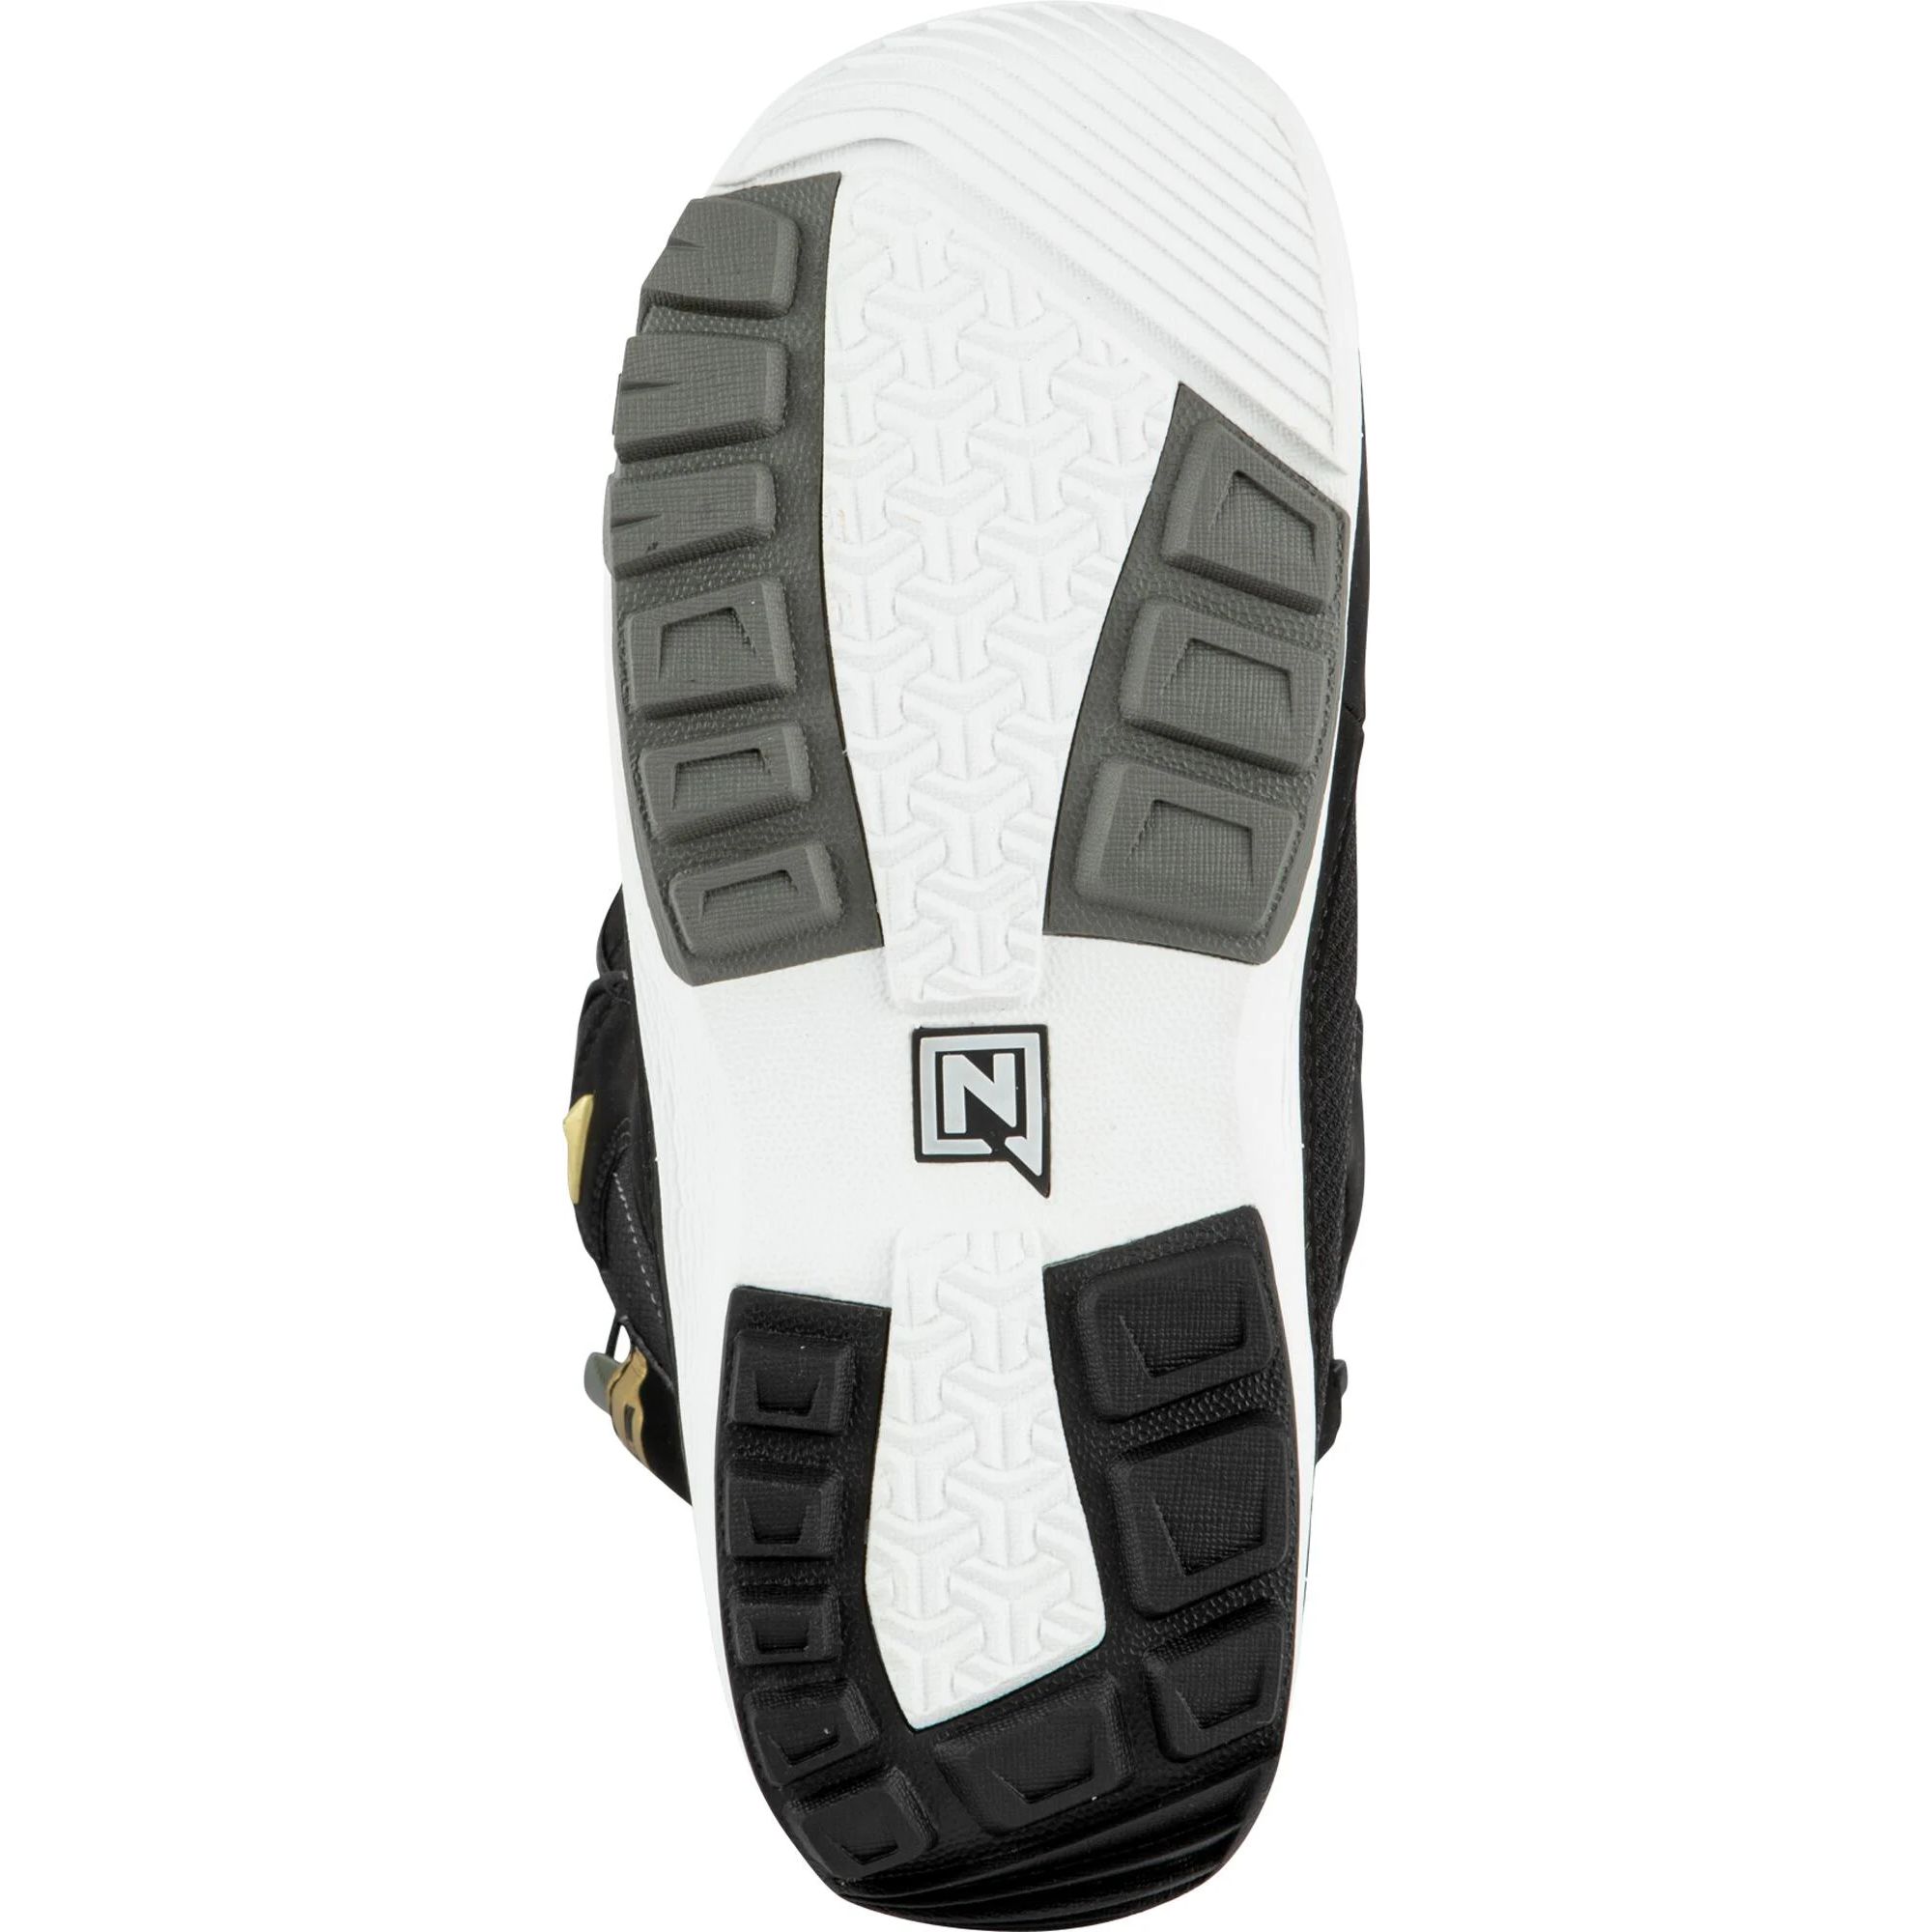 Snowboard Boots -  nitro MONARCH TLS